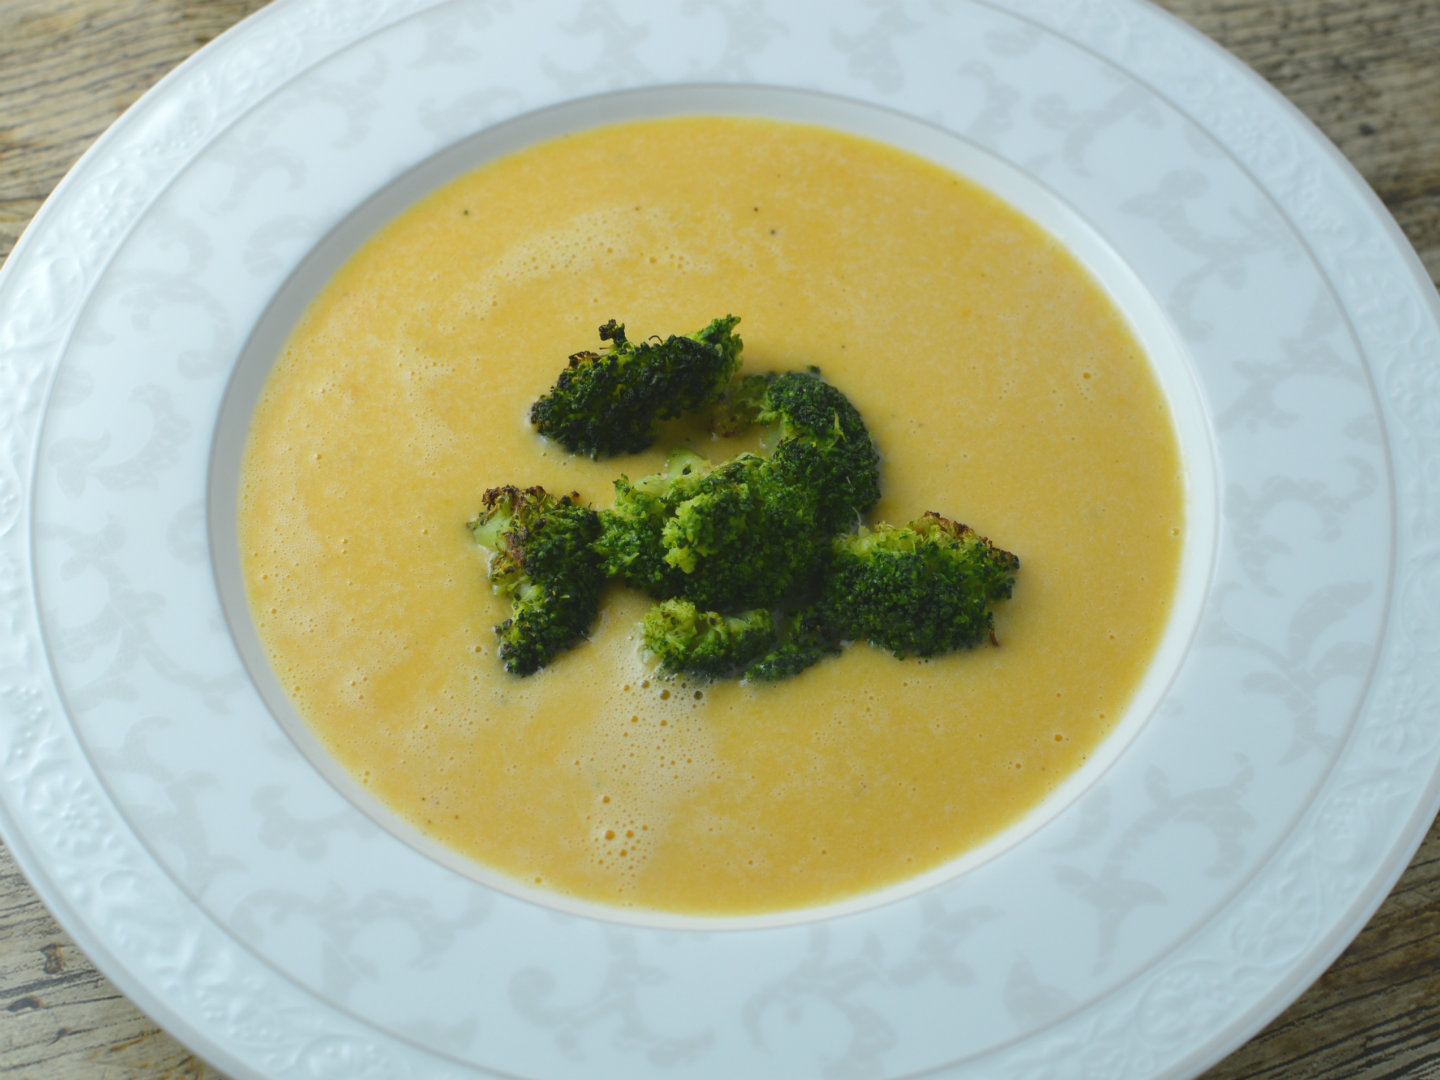 Smoky sweet potato cheese soup with broccoli